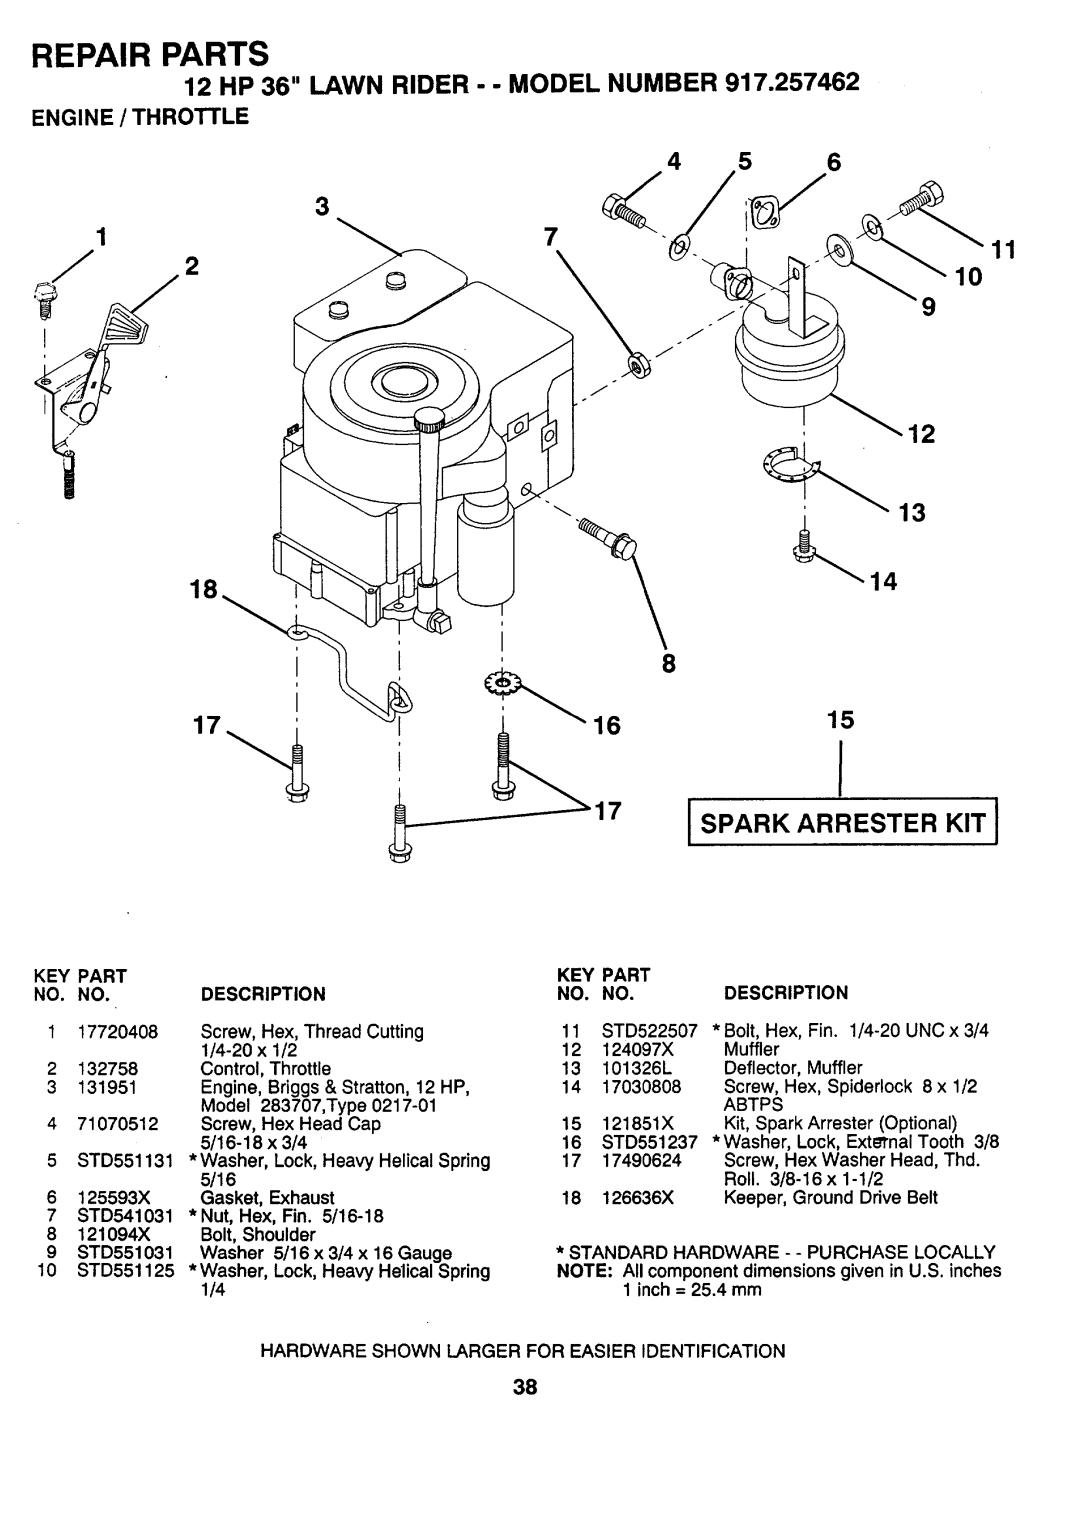 Sears 917.257462 manual 13 14, 15 17, Engine / Throttle, Repair Parts, 12 HP 36 LAWN RIDER - - MODEL NUMBER 